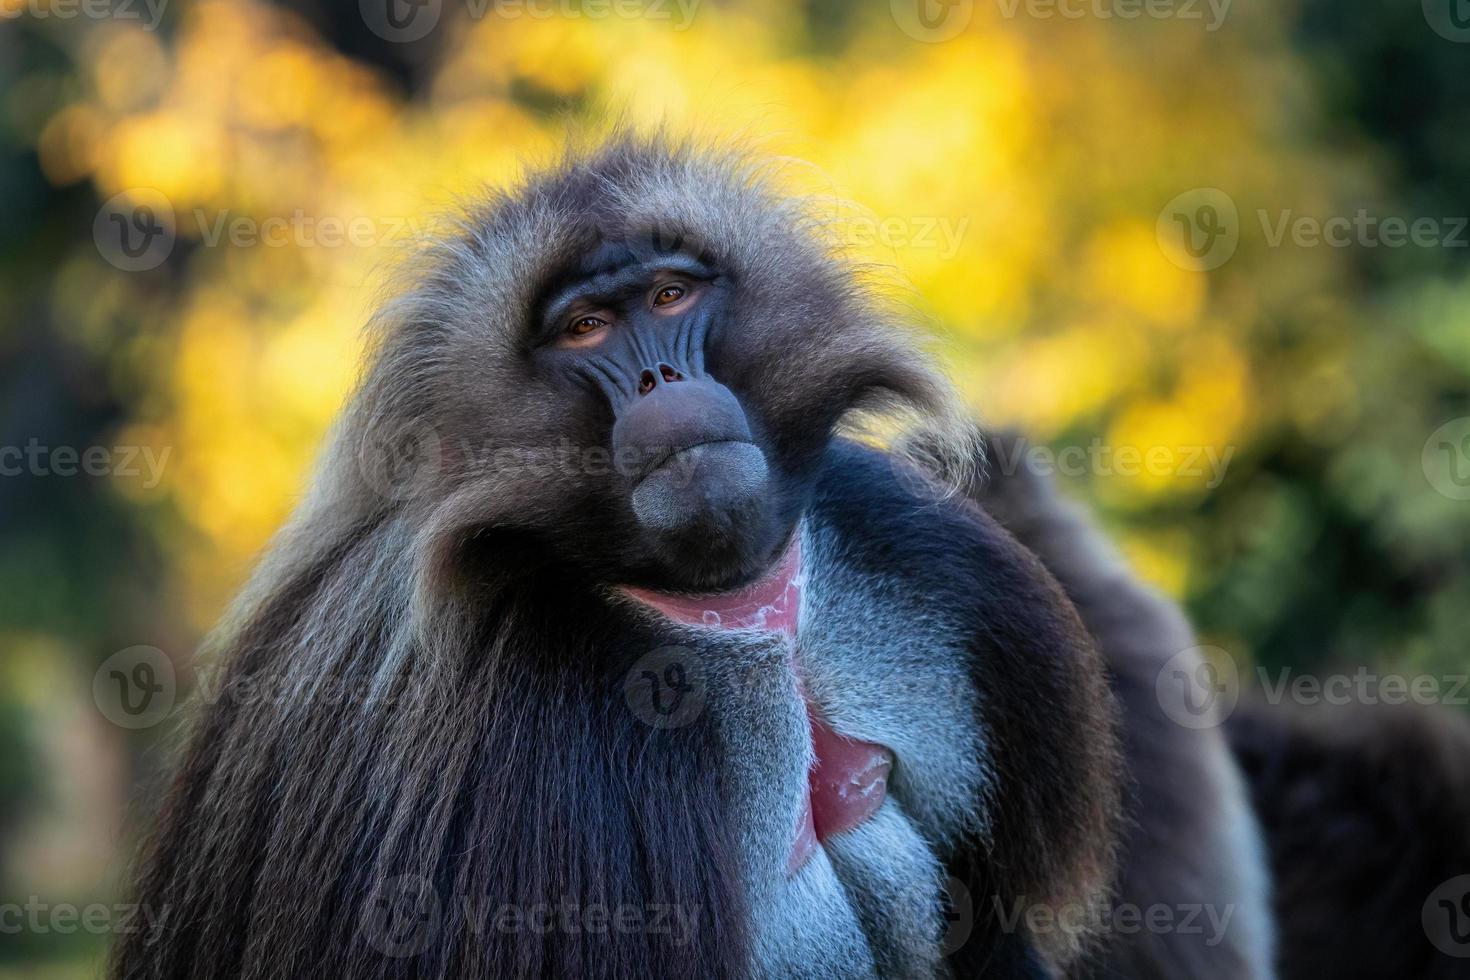 macho alfa do babuíno gelada - theropithecus gelada, belo primata terrestre foto